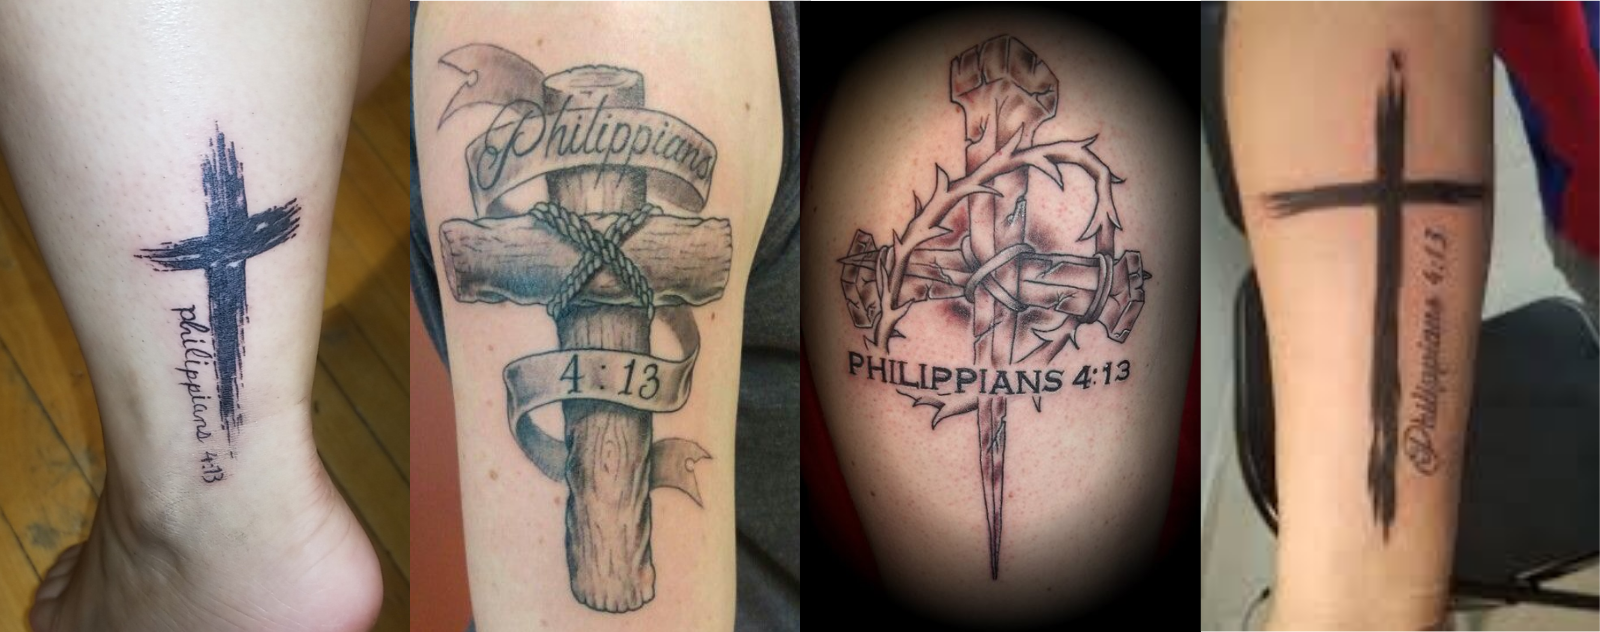 philippians-4-13-tattoo-with-cross-4